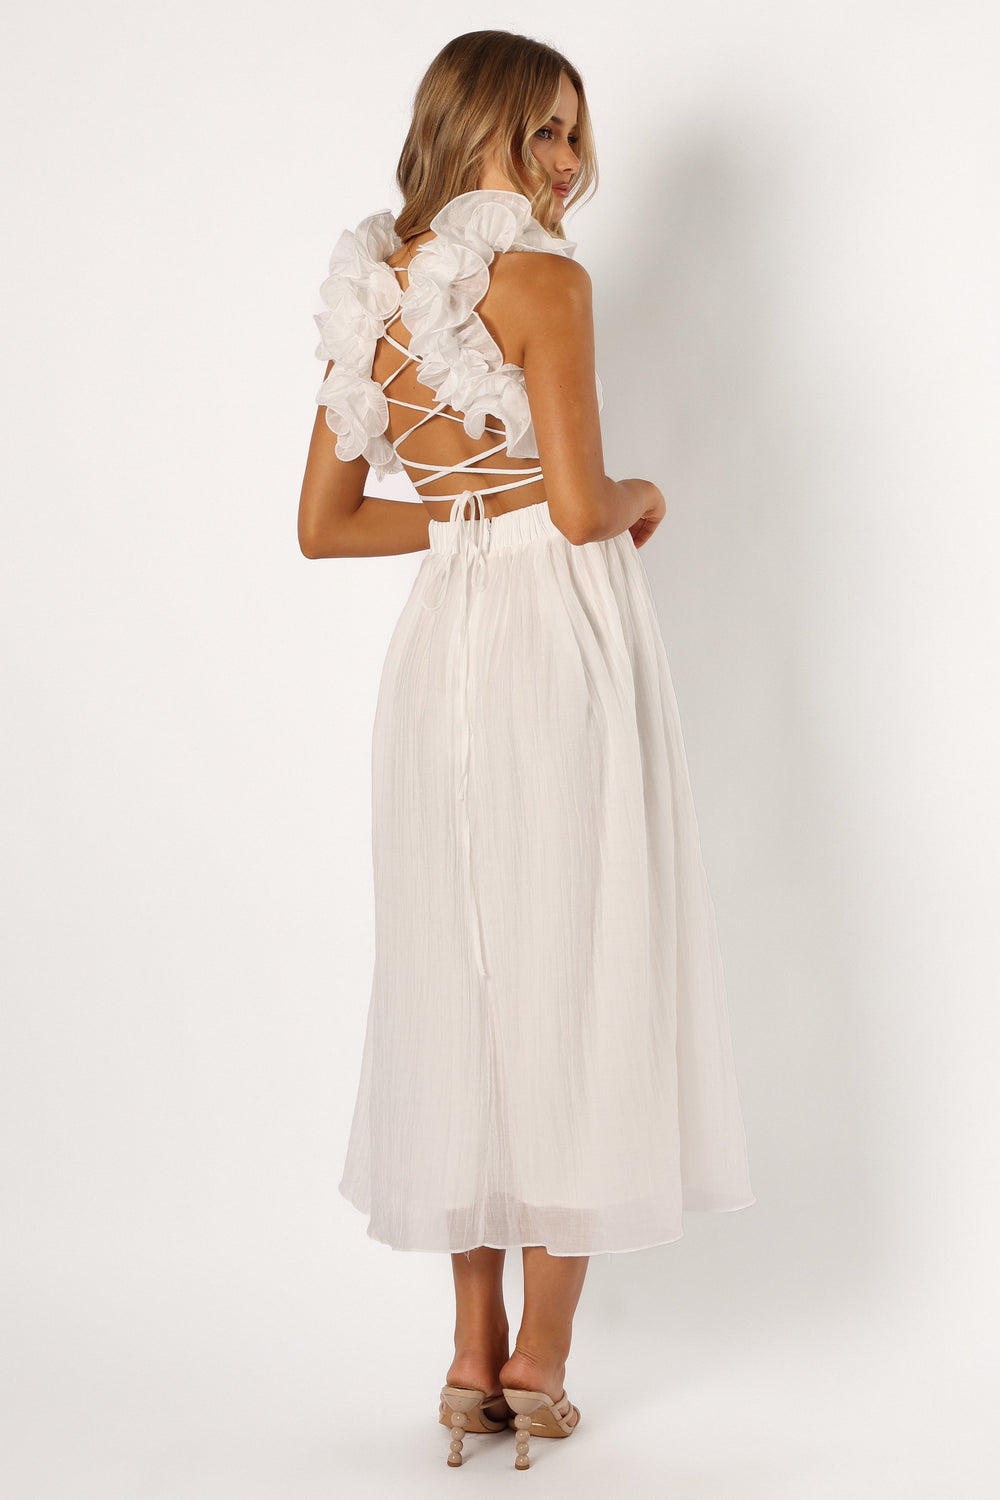 Shop Formal Dress - Blake Frill Shoulder Maxi Dress - White fourth image